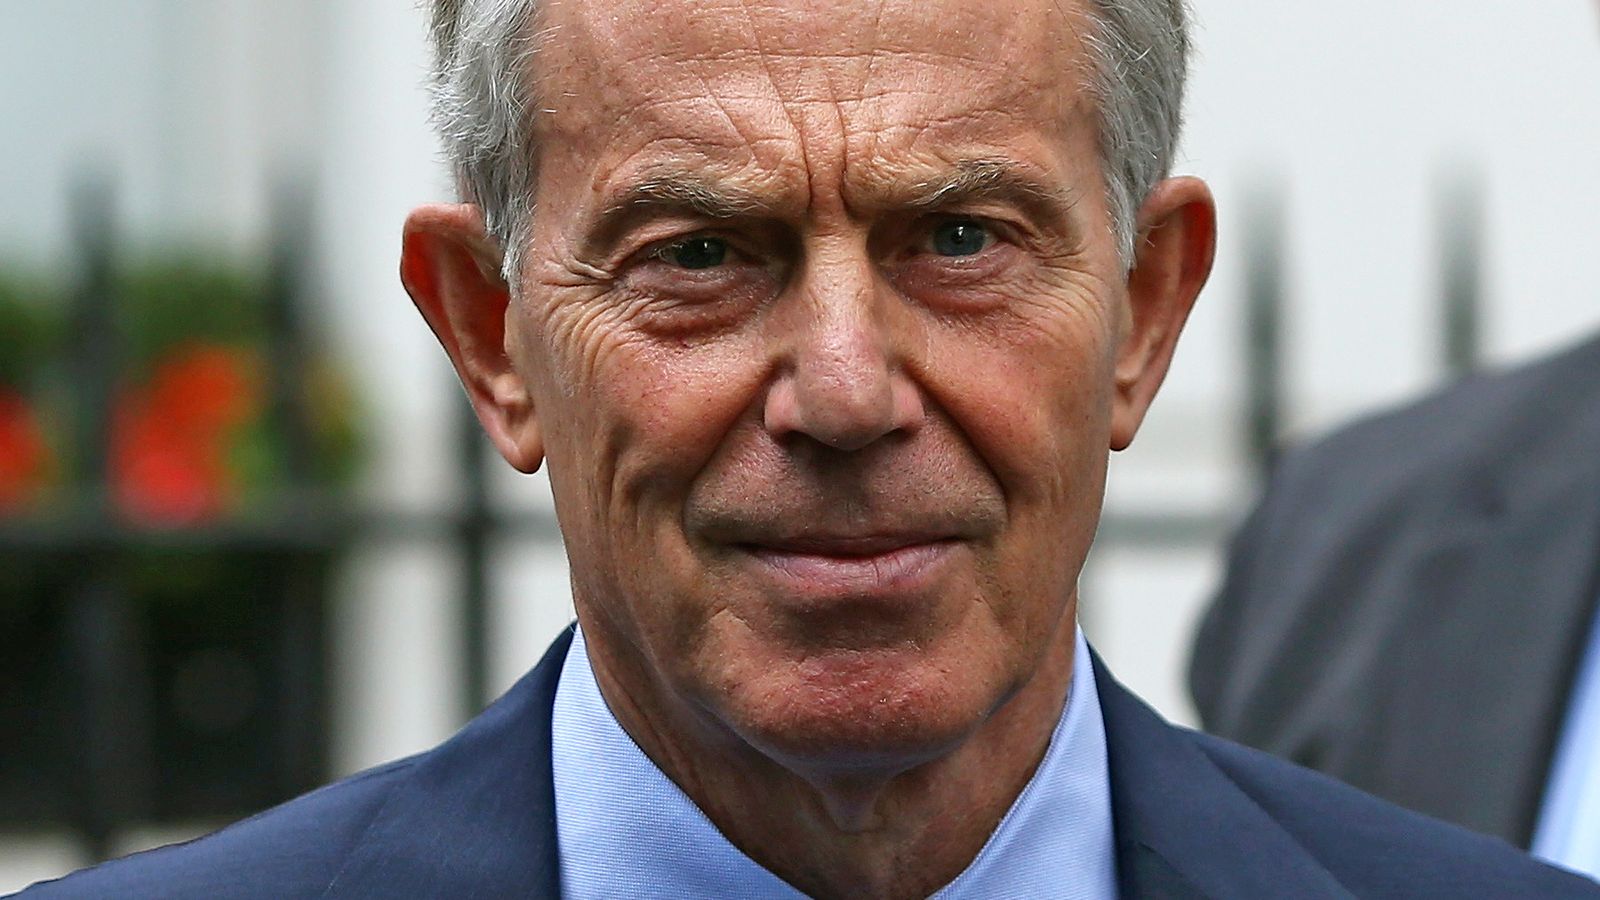 Tony Blair to blame for Brexit, says Hammond - Sky News